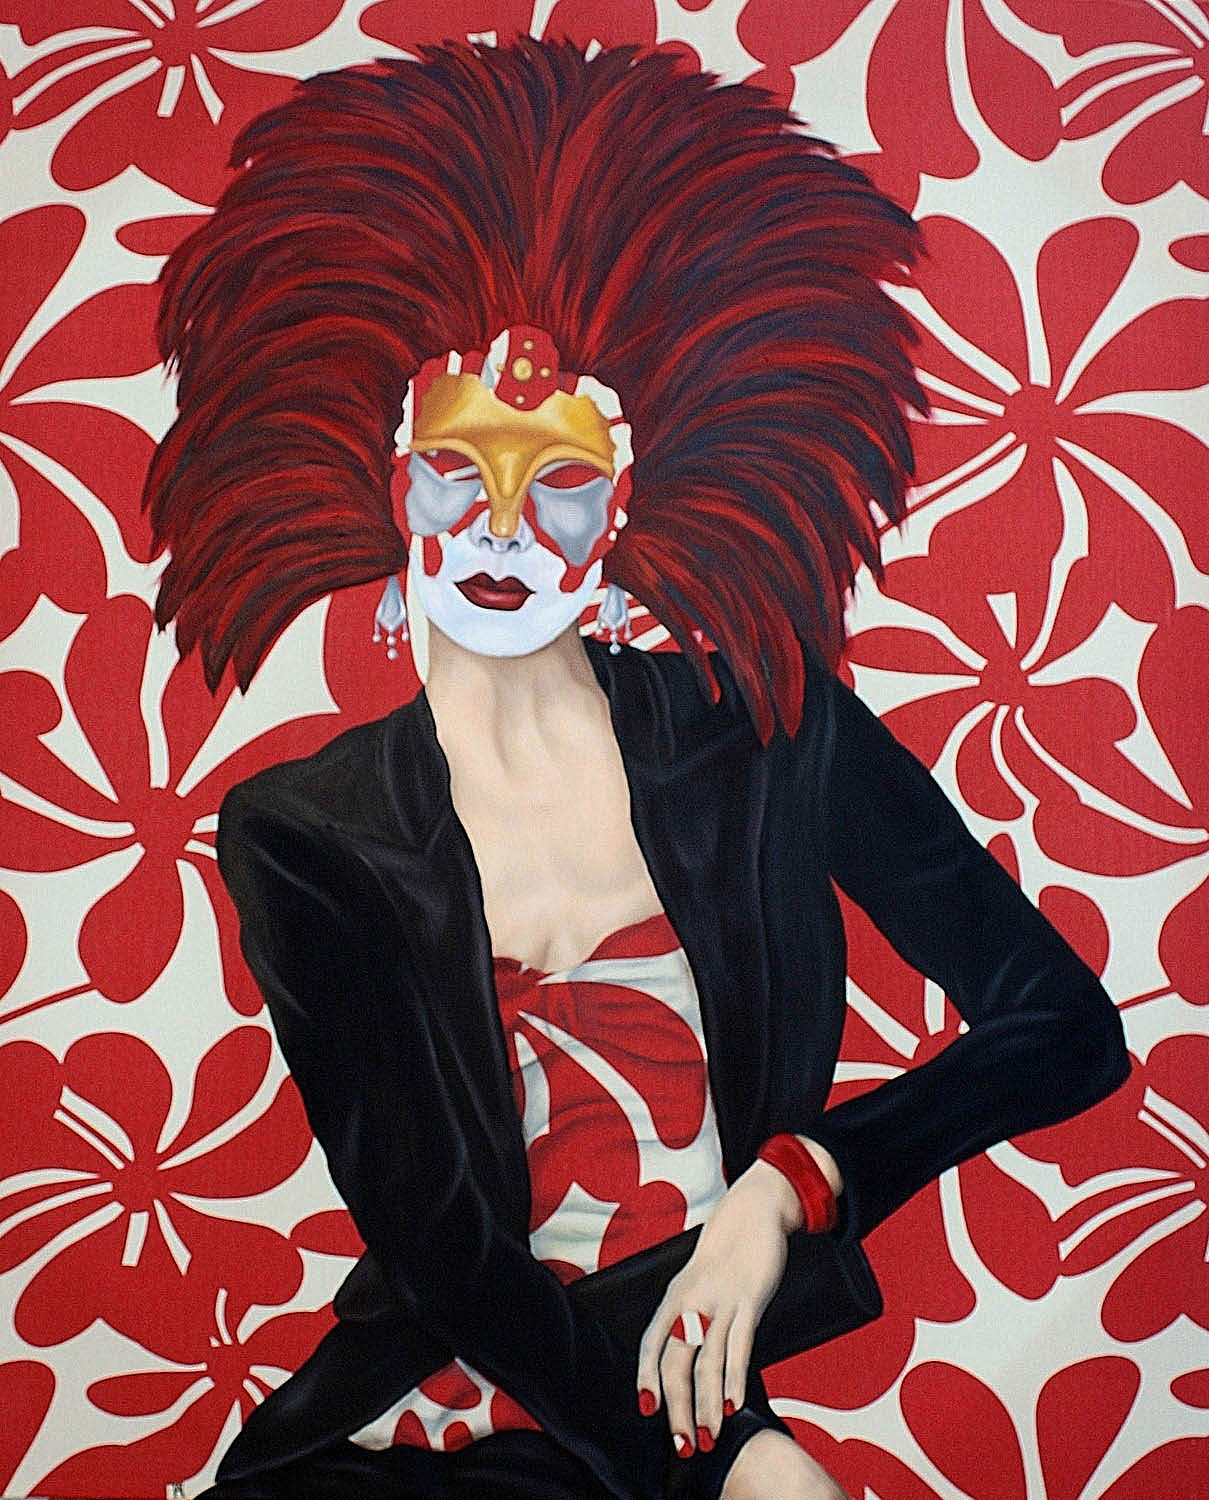 Alea Hurst, Showstopper, 2013. Oil on fabric, 36 x 30 in.